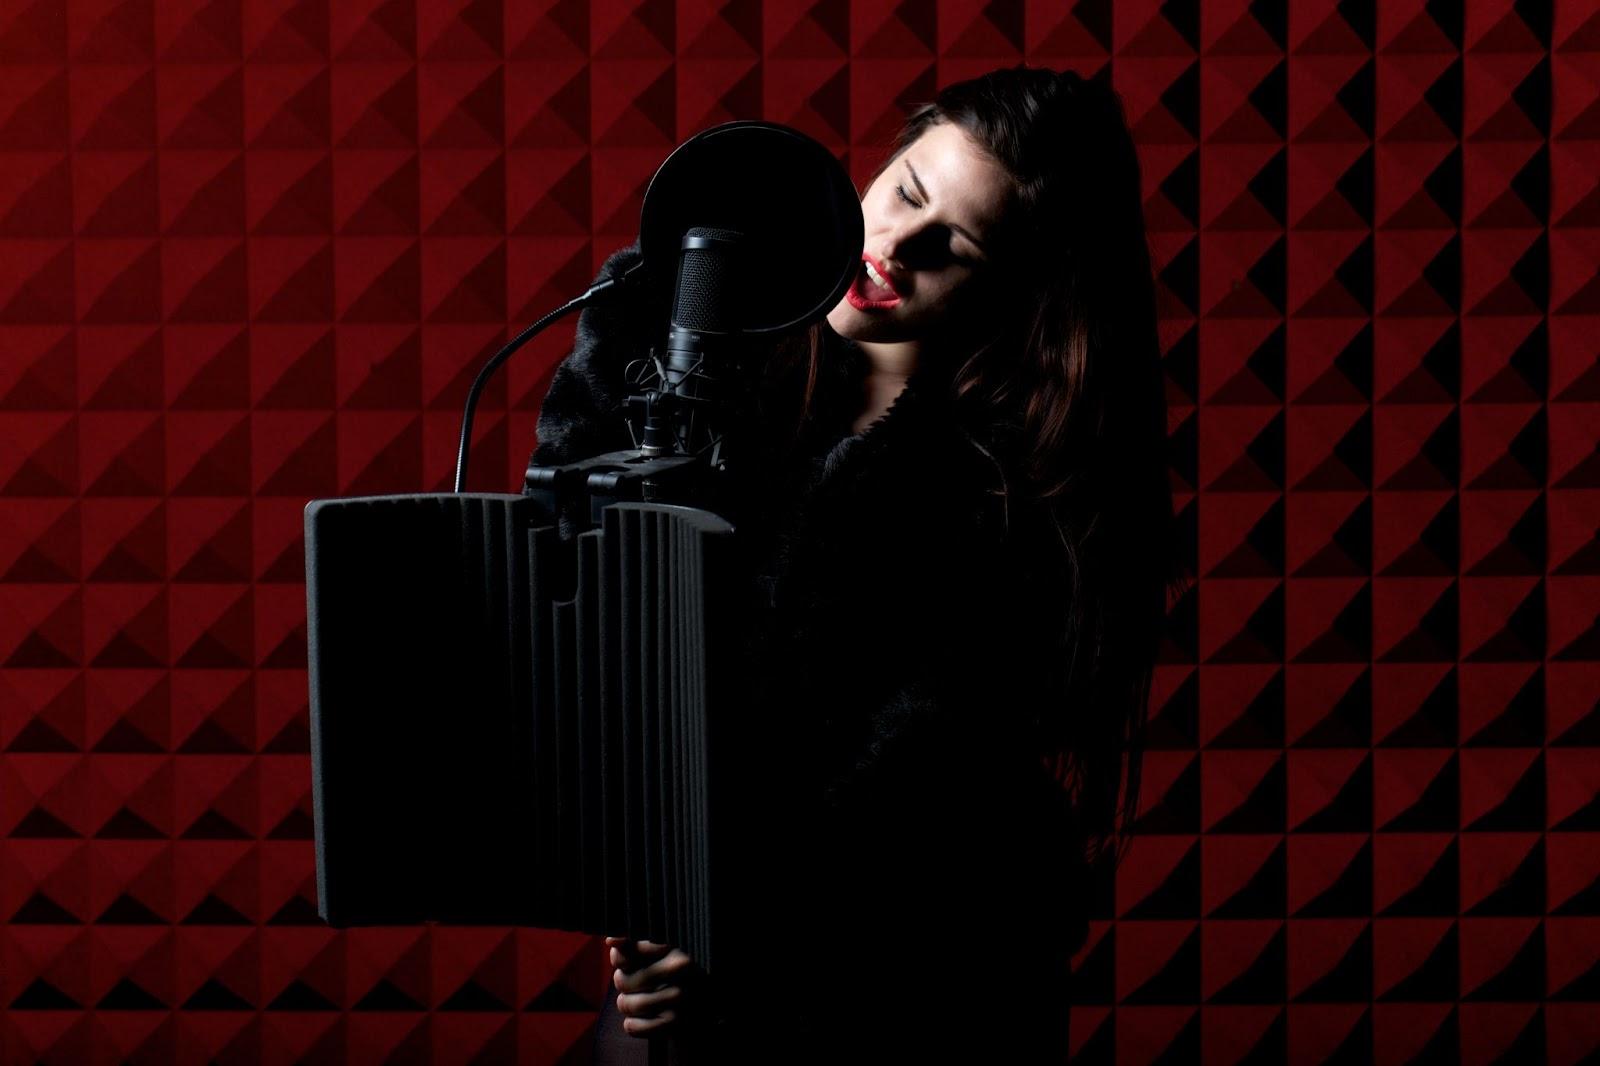 Singer in studio with dark red background